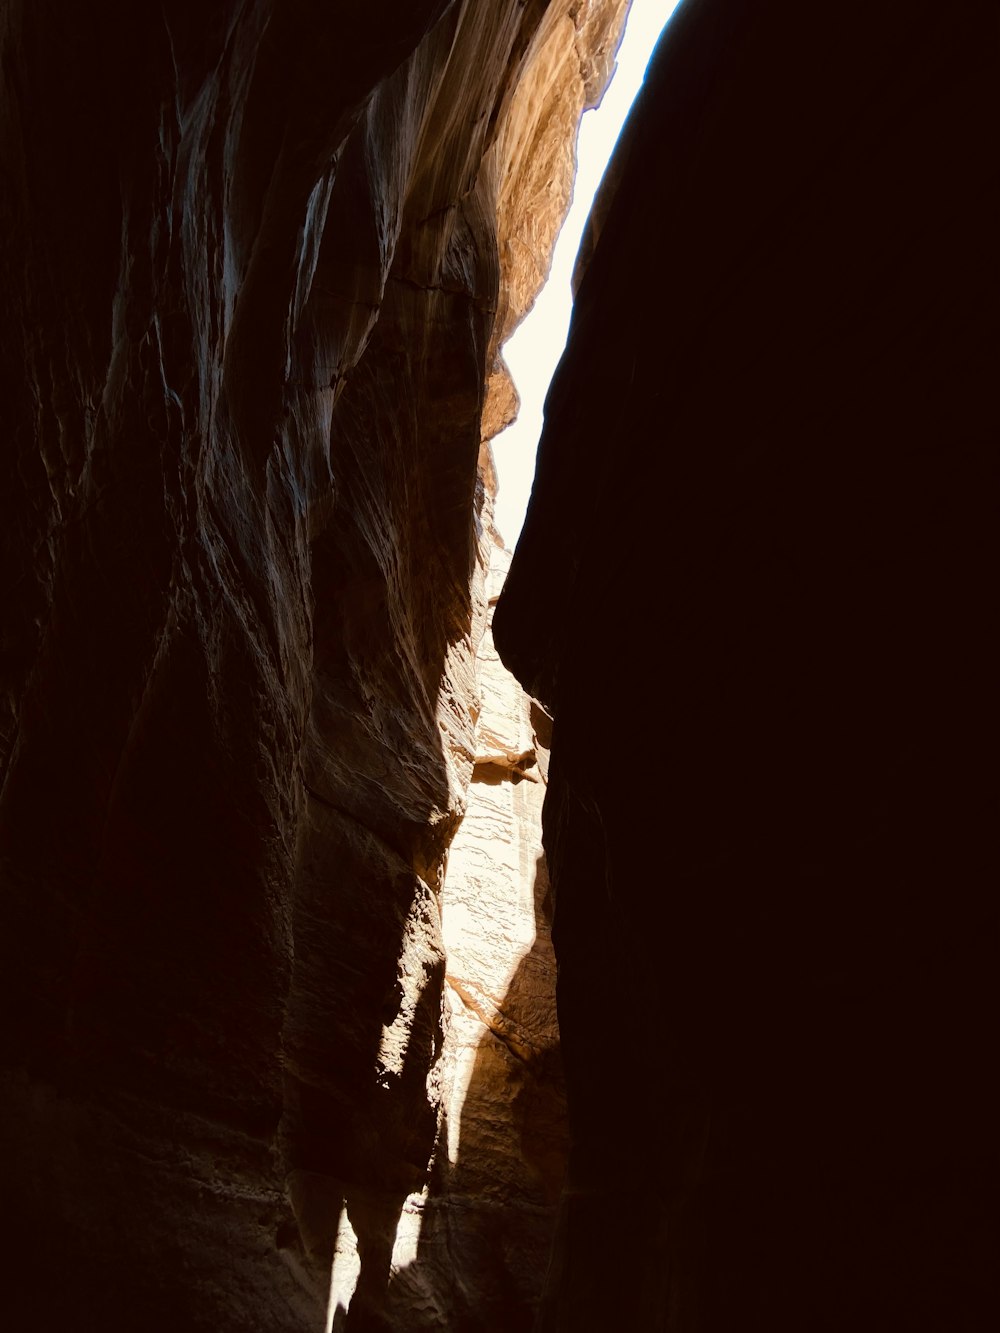 a person walking through a narrow slot in a cave